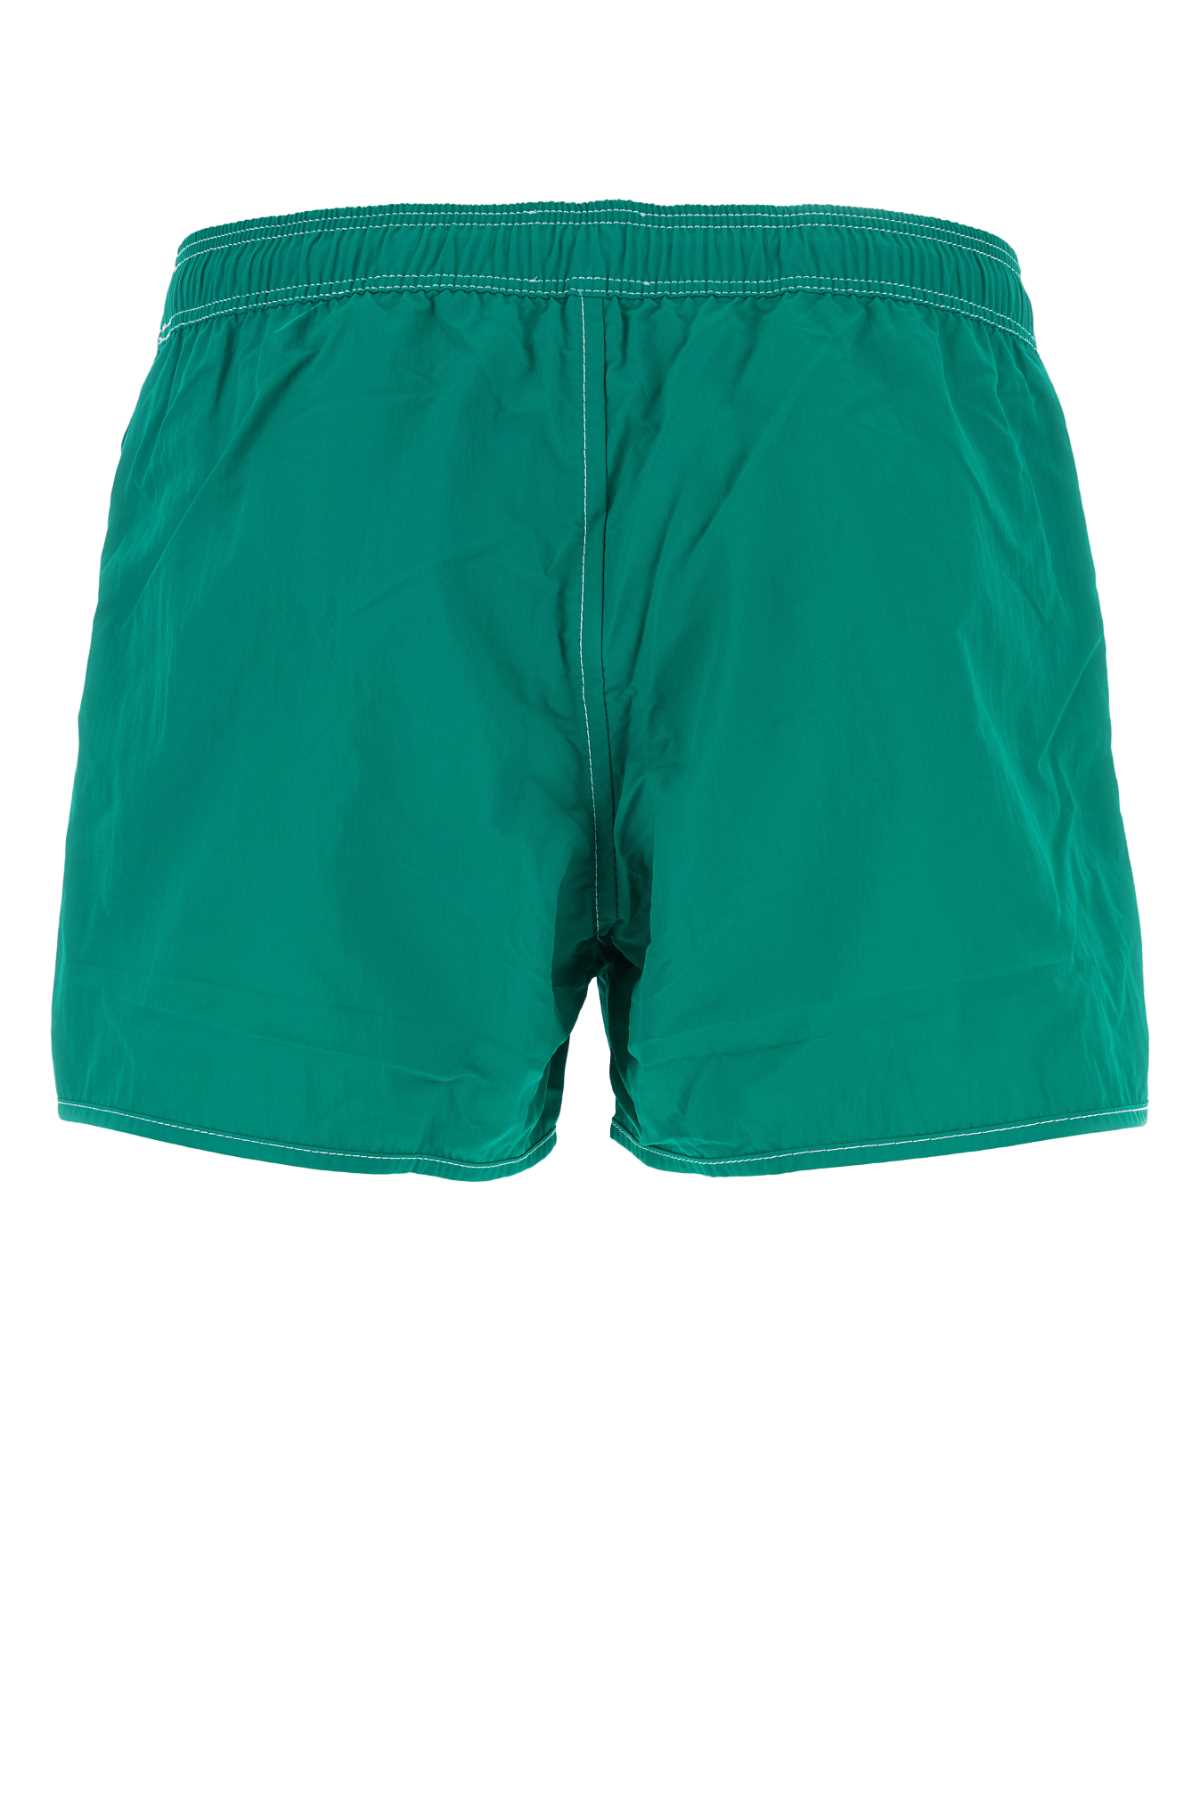 Isabel Marant Emerald Green Nylon Vicente Swimming Shorts